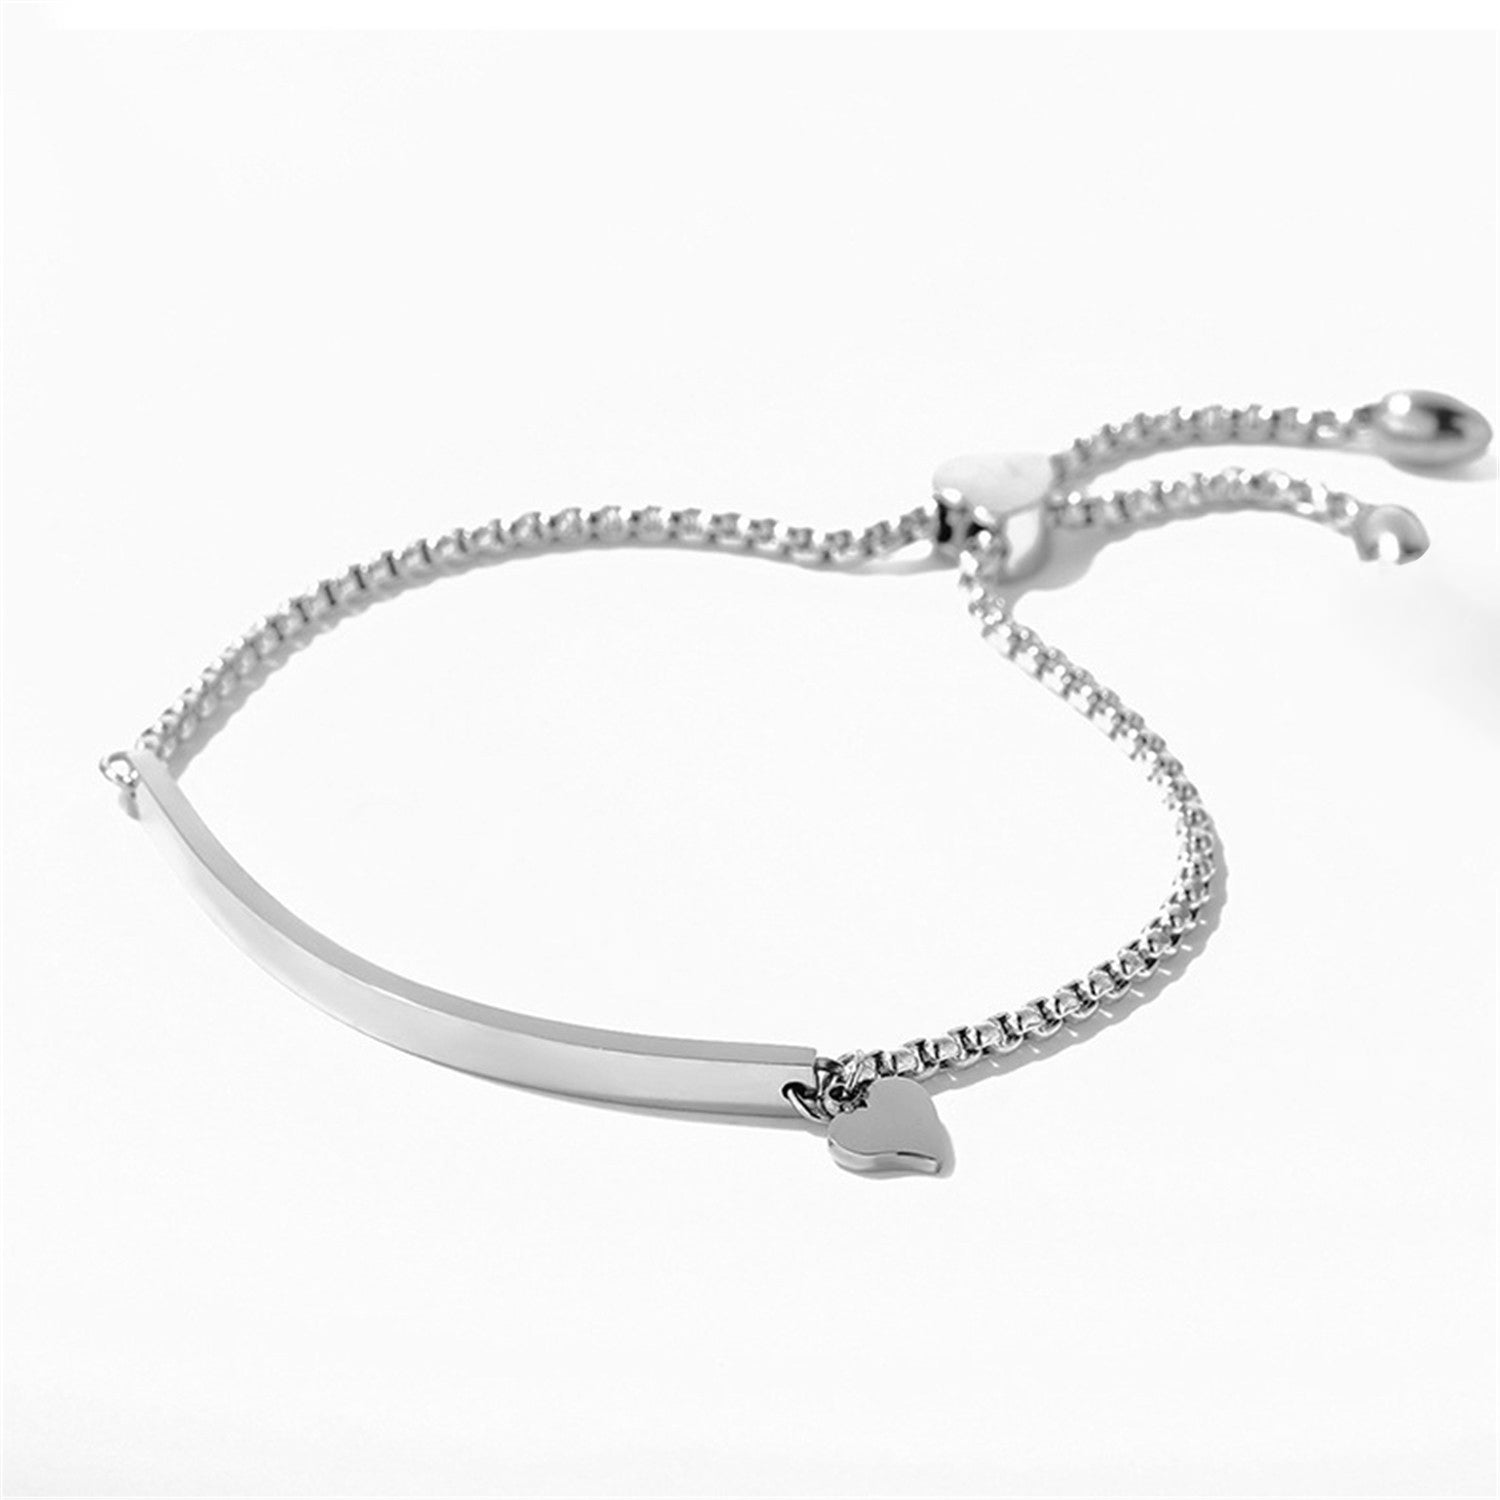 Titanium Steel Bracelet For Girl,Smooth Surface,Telescopic,Adjustable.